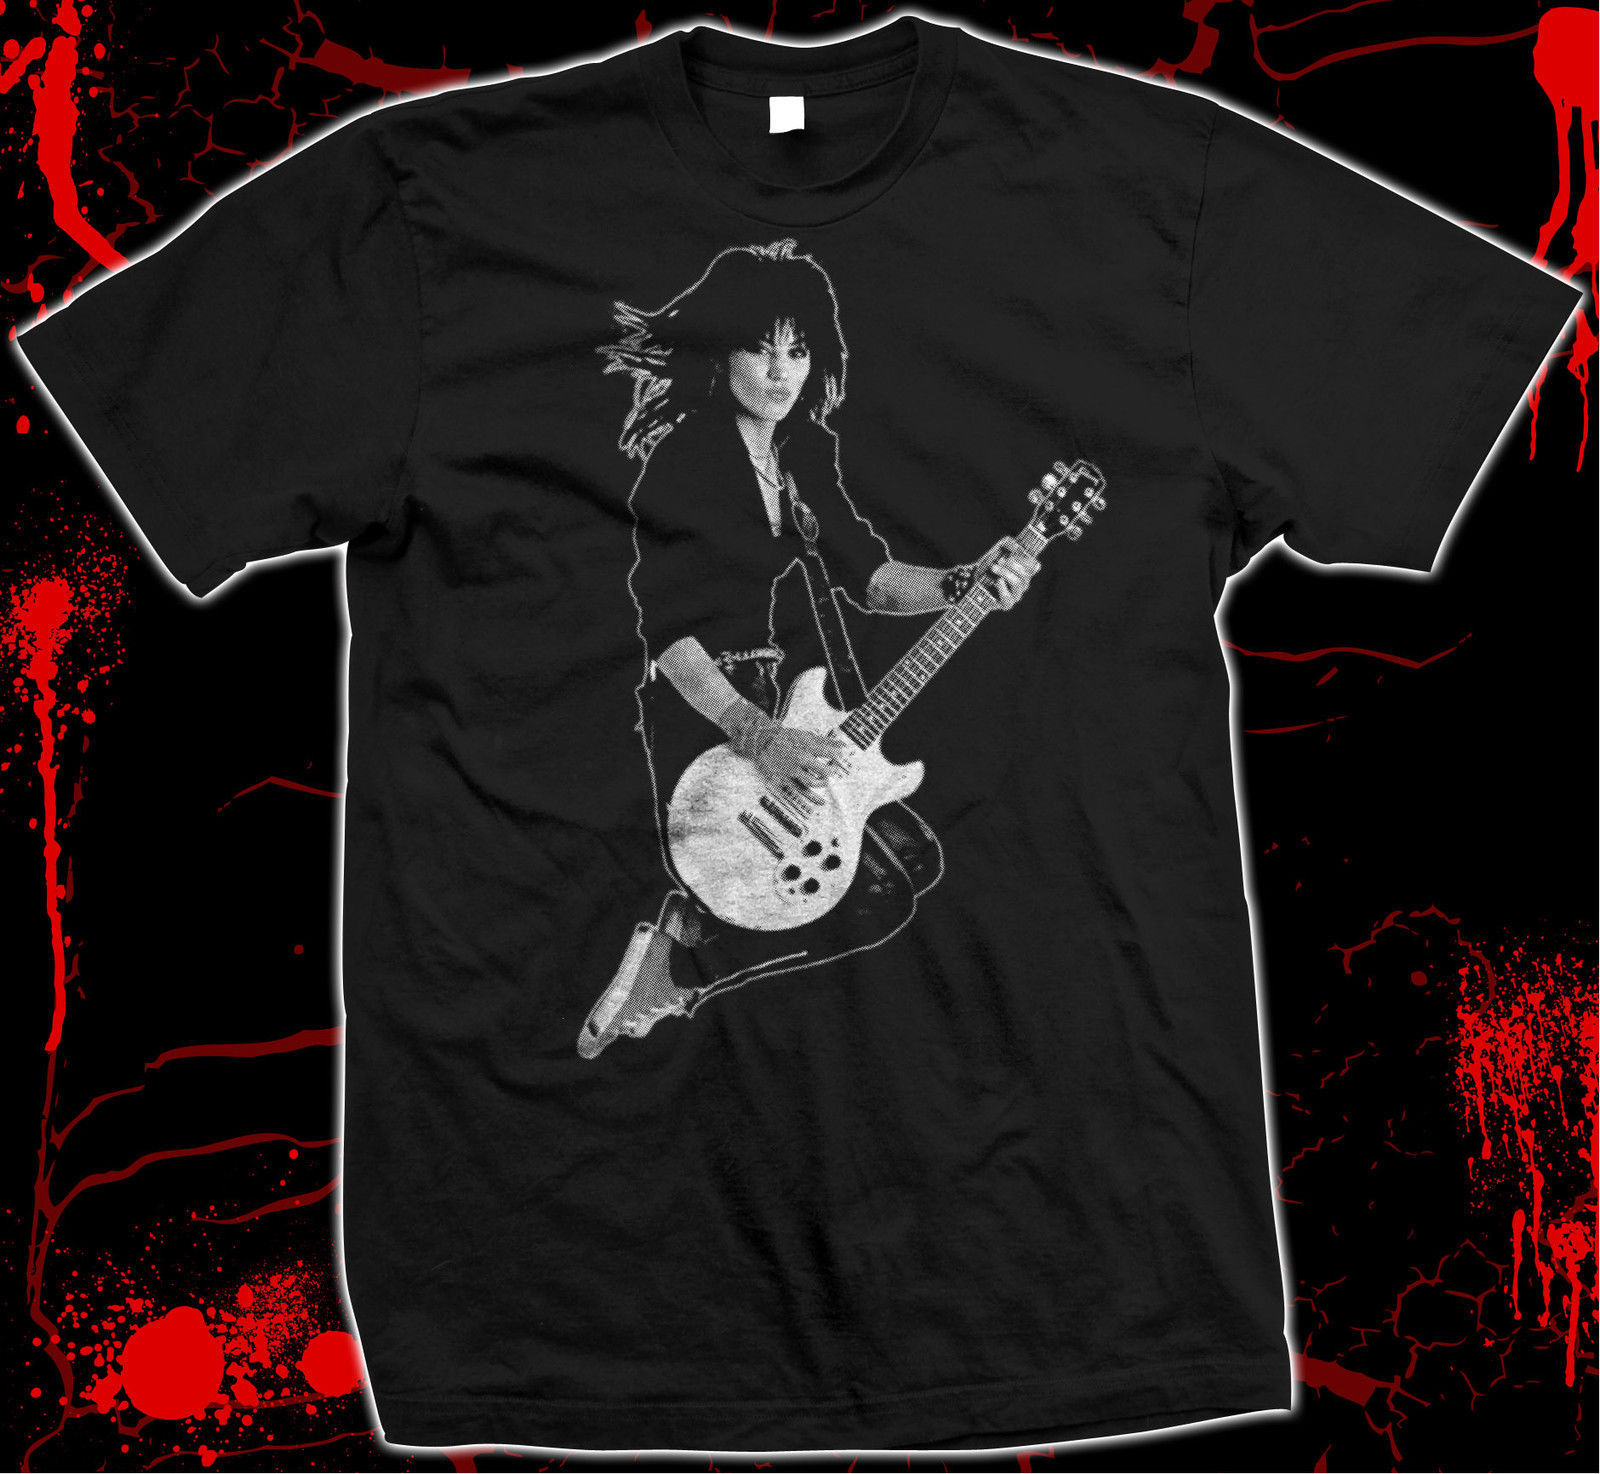 Joan Jett - The Runaways - Blackhearts - Hand Screened 100% cotton t-shirt